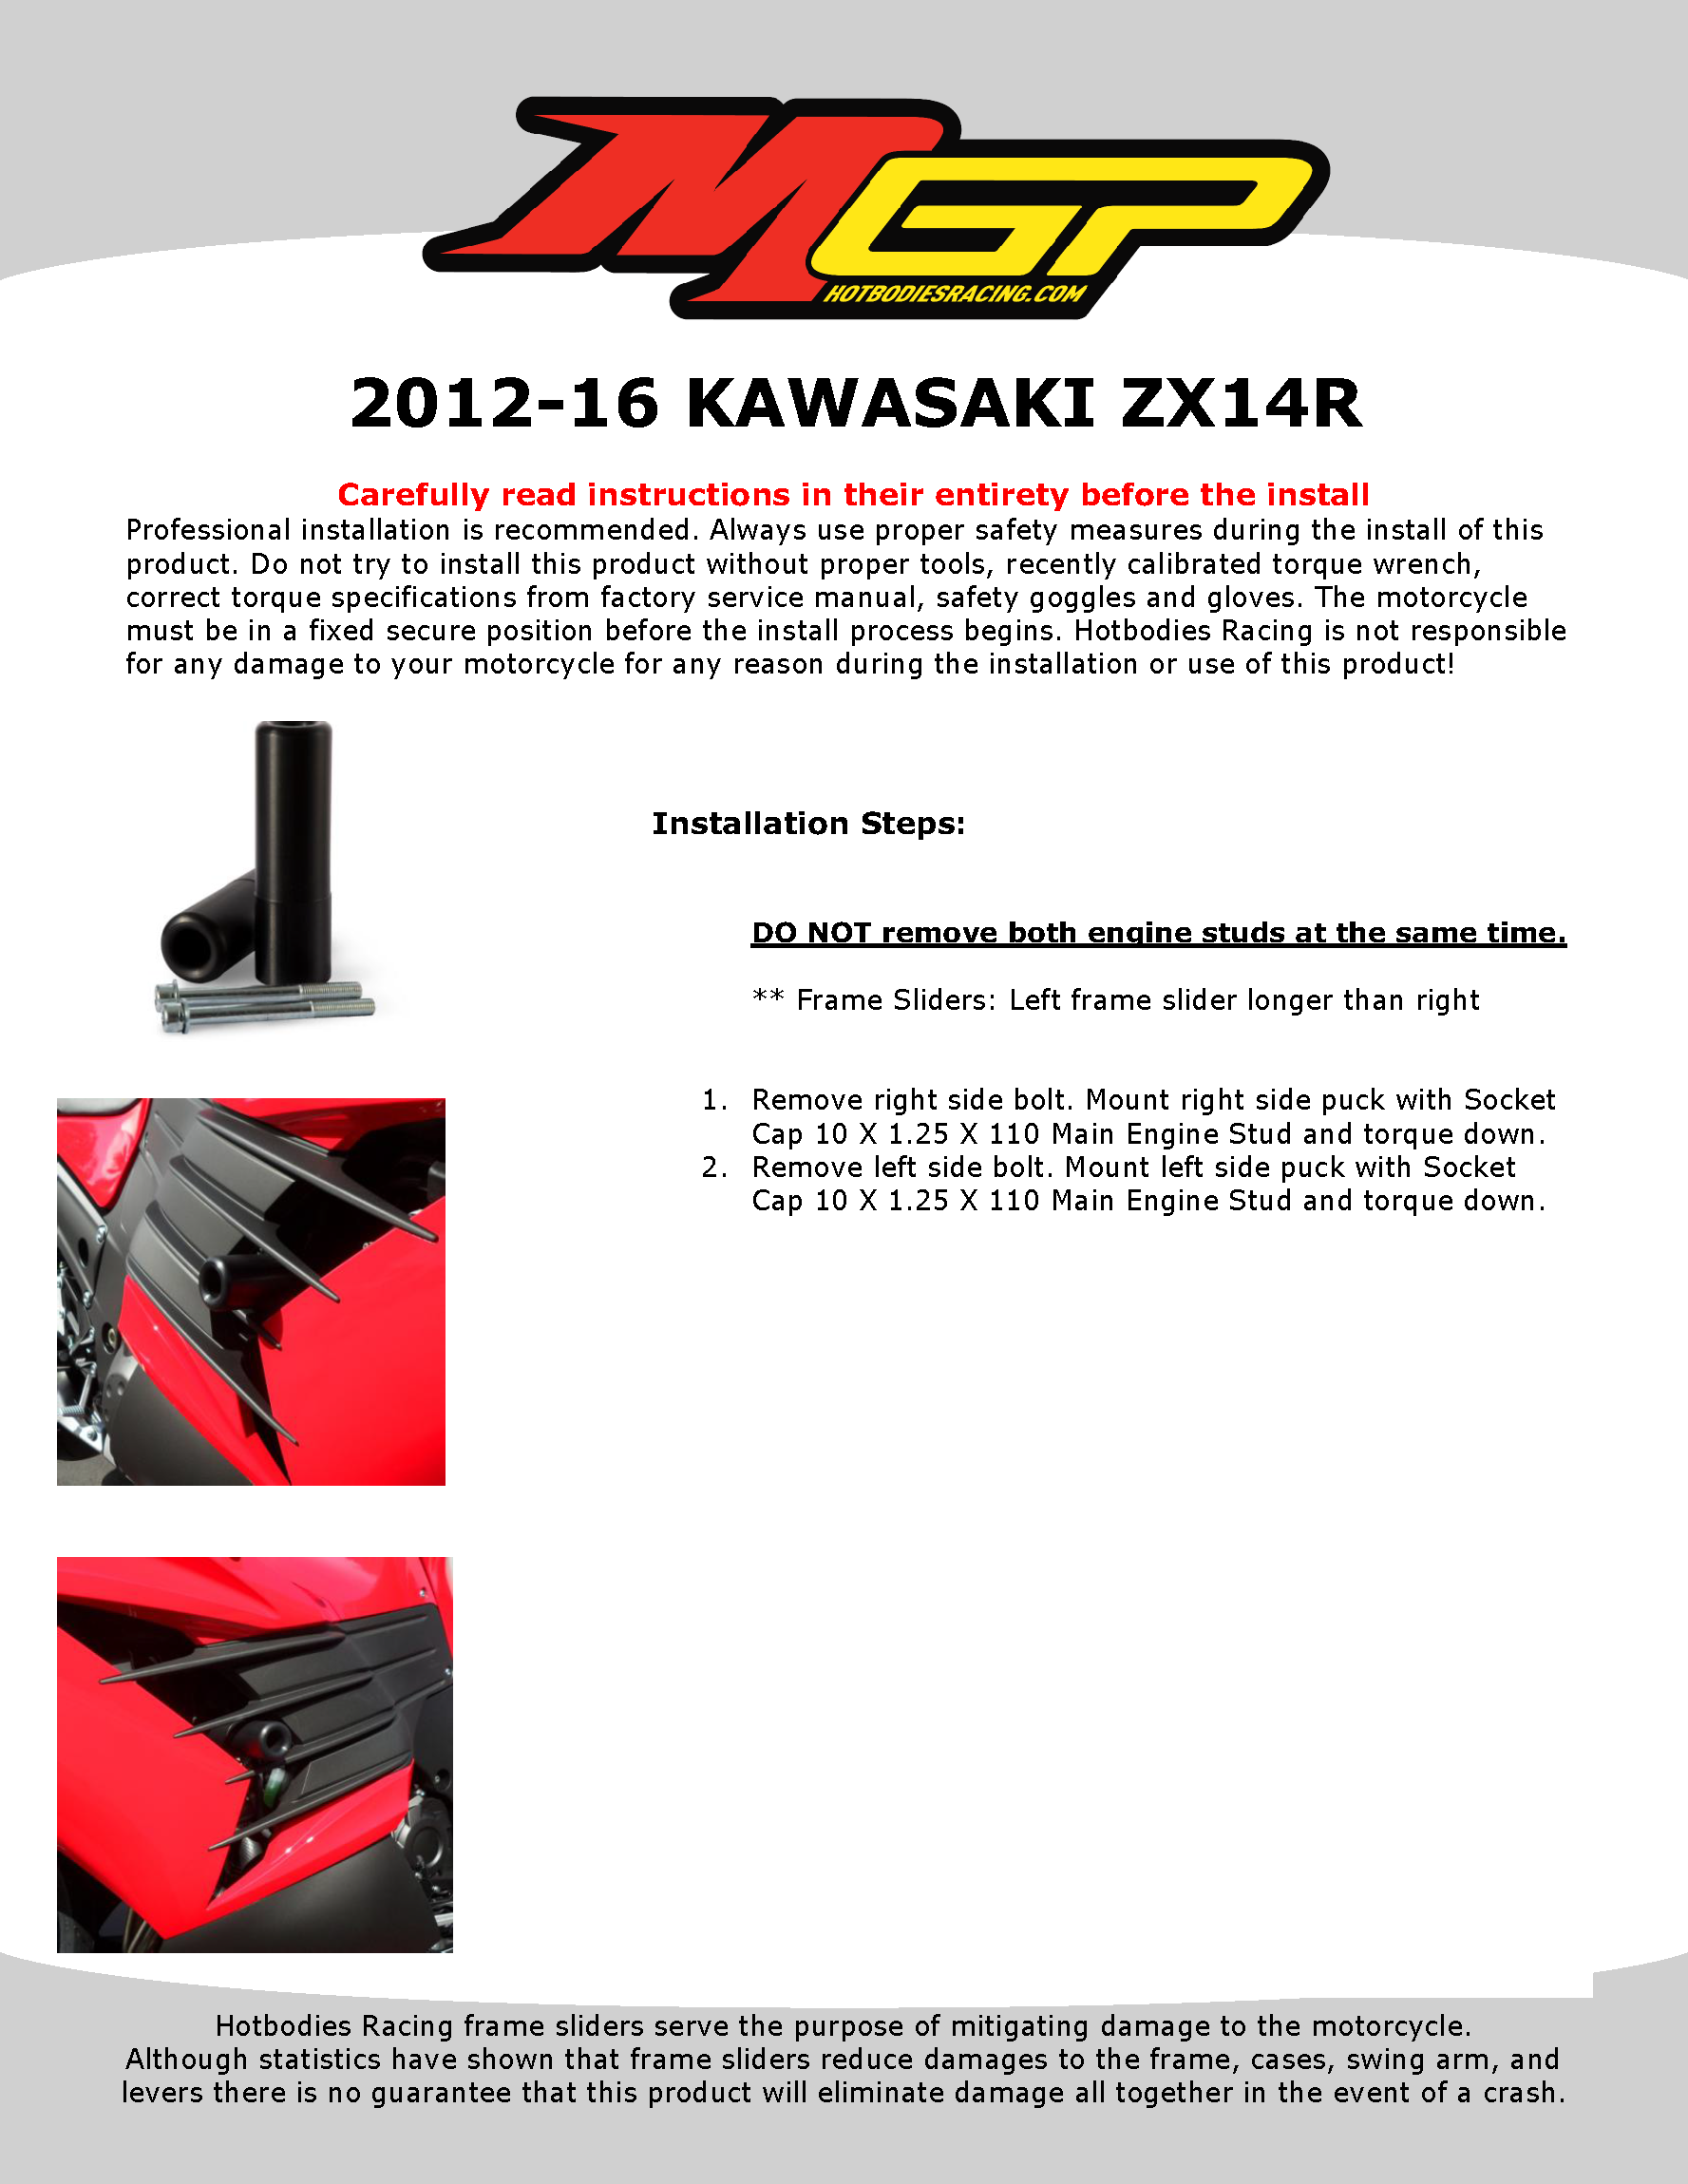 

ZX14R 2012-16 NO CUT Frame Sliders

